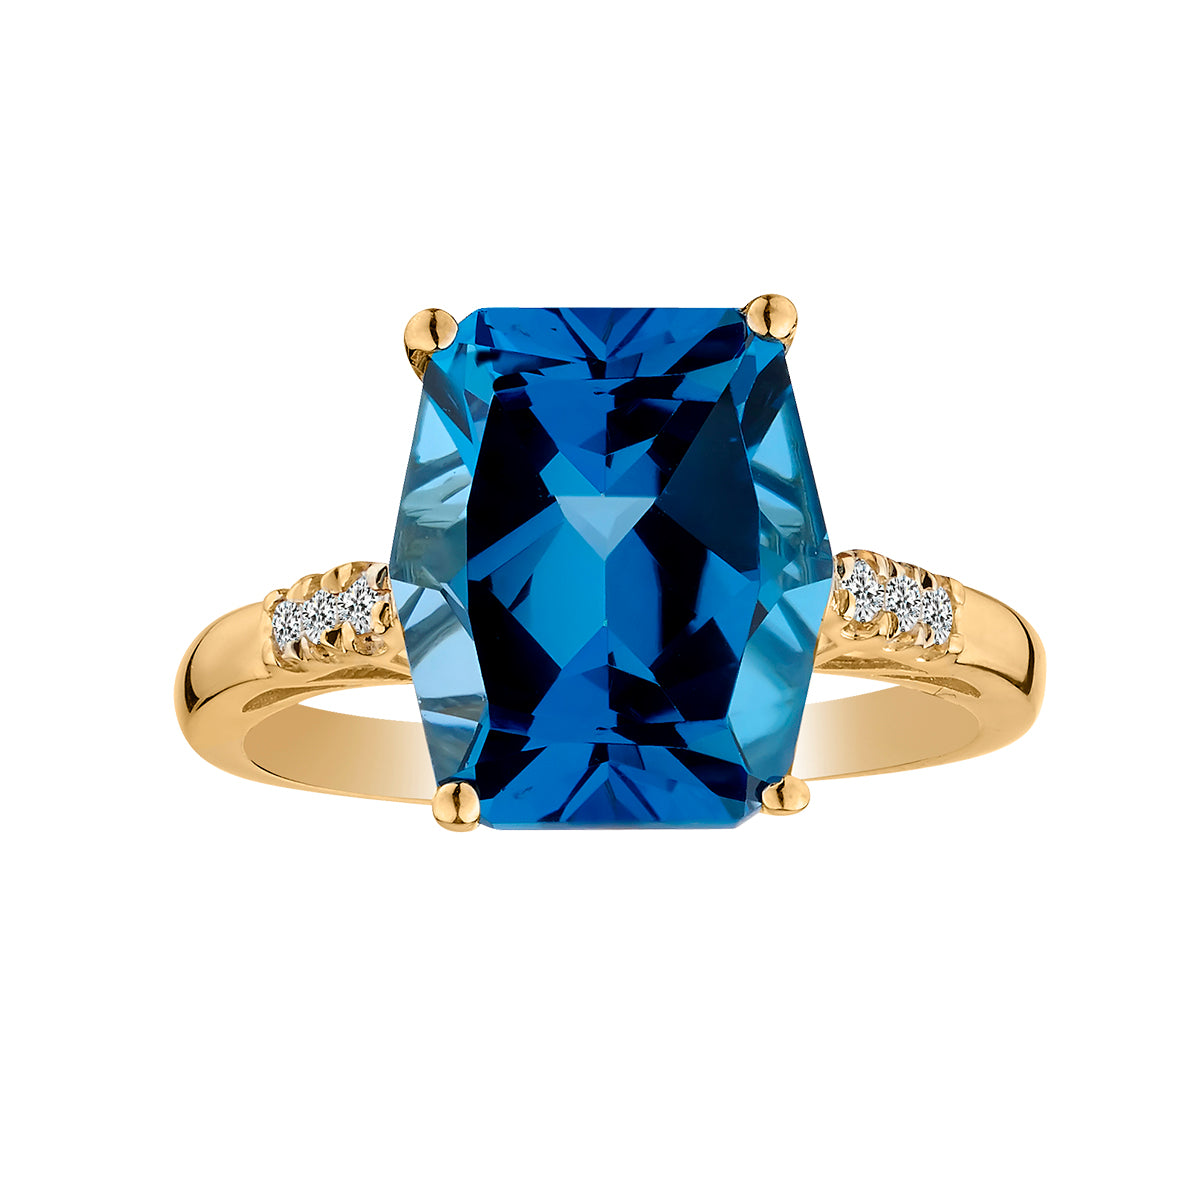 6.34 Carat London Blue Topaz and .07 Carat Diamond Ring, 10kt Yellow Gold.......................NOW